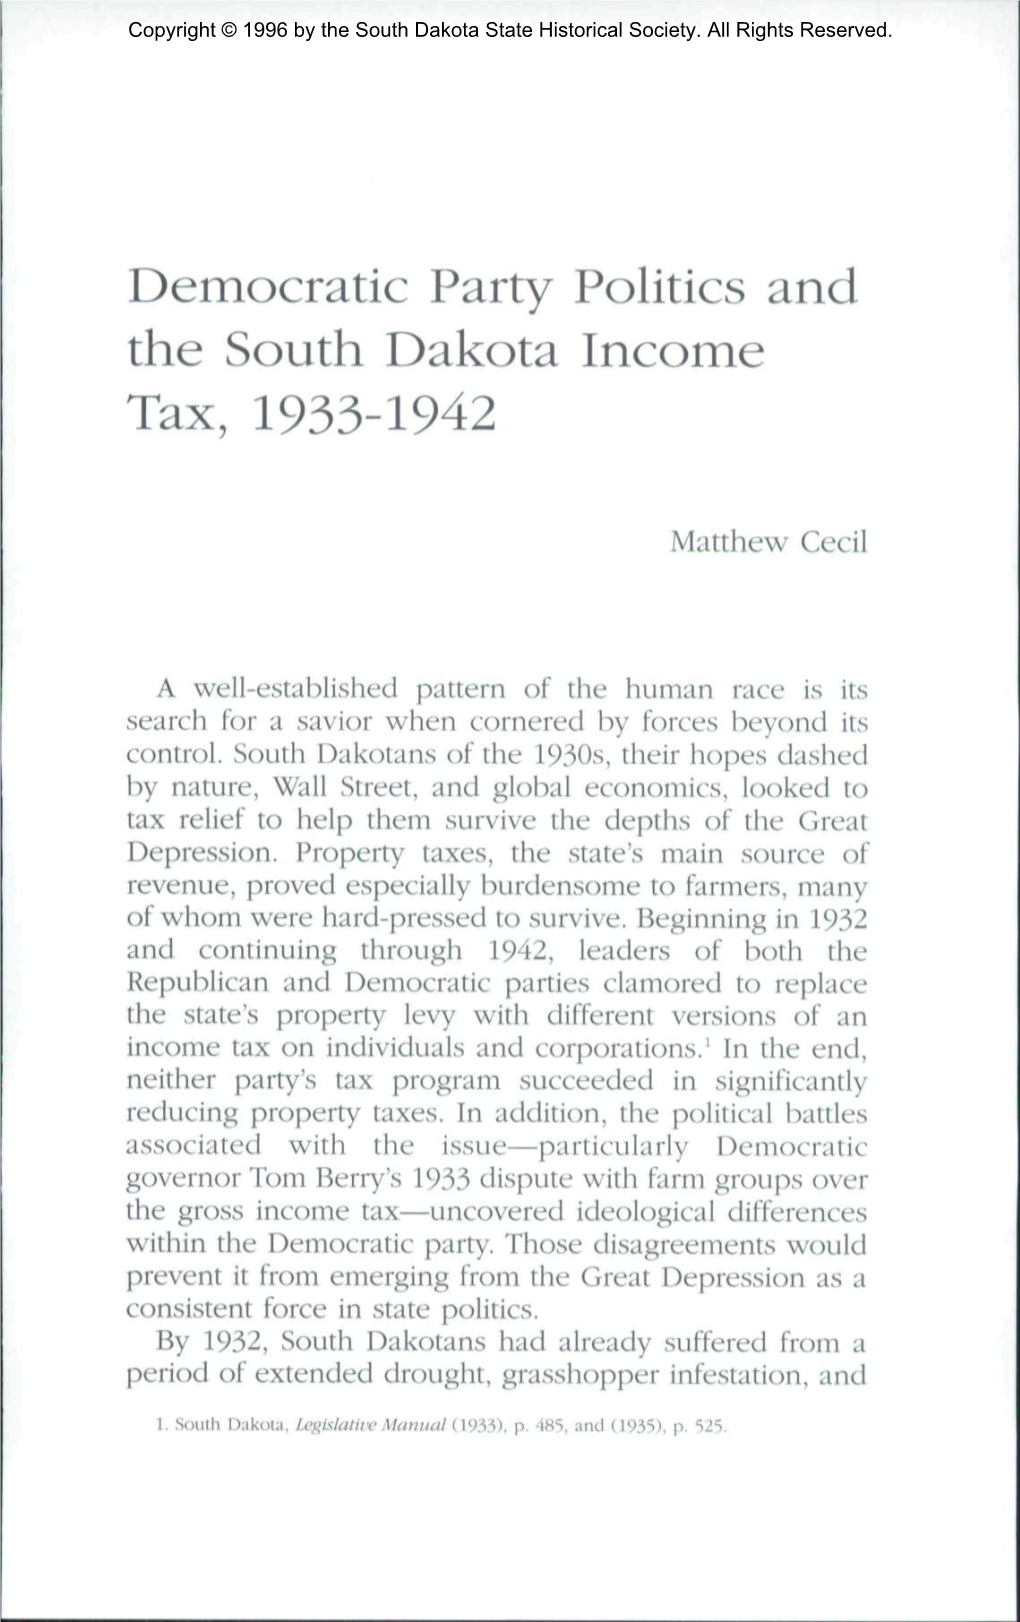 Democratic Party Politics and the South Dakota Income Tax, 1933-1942